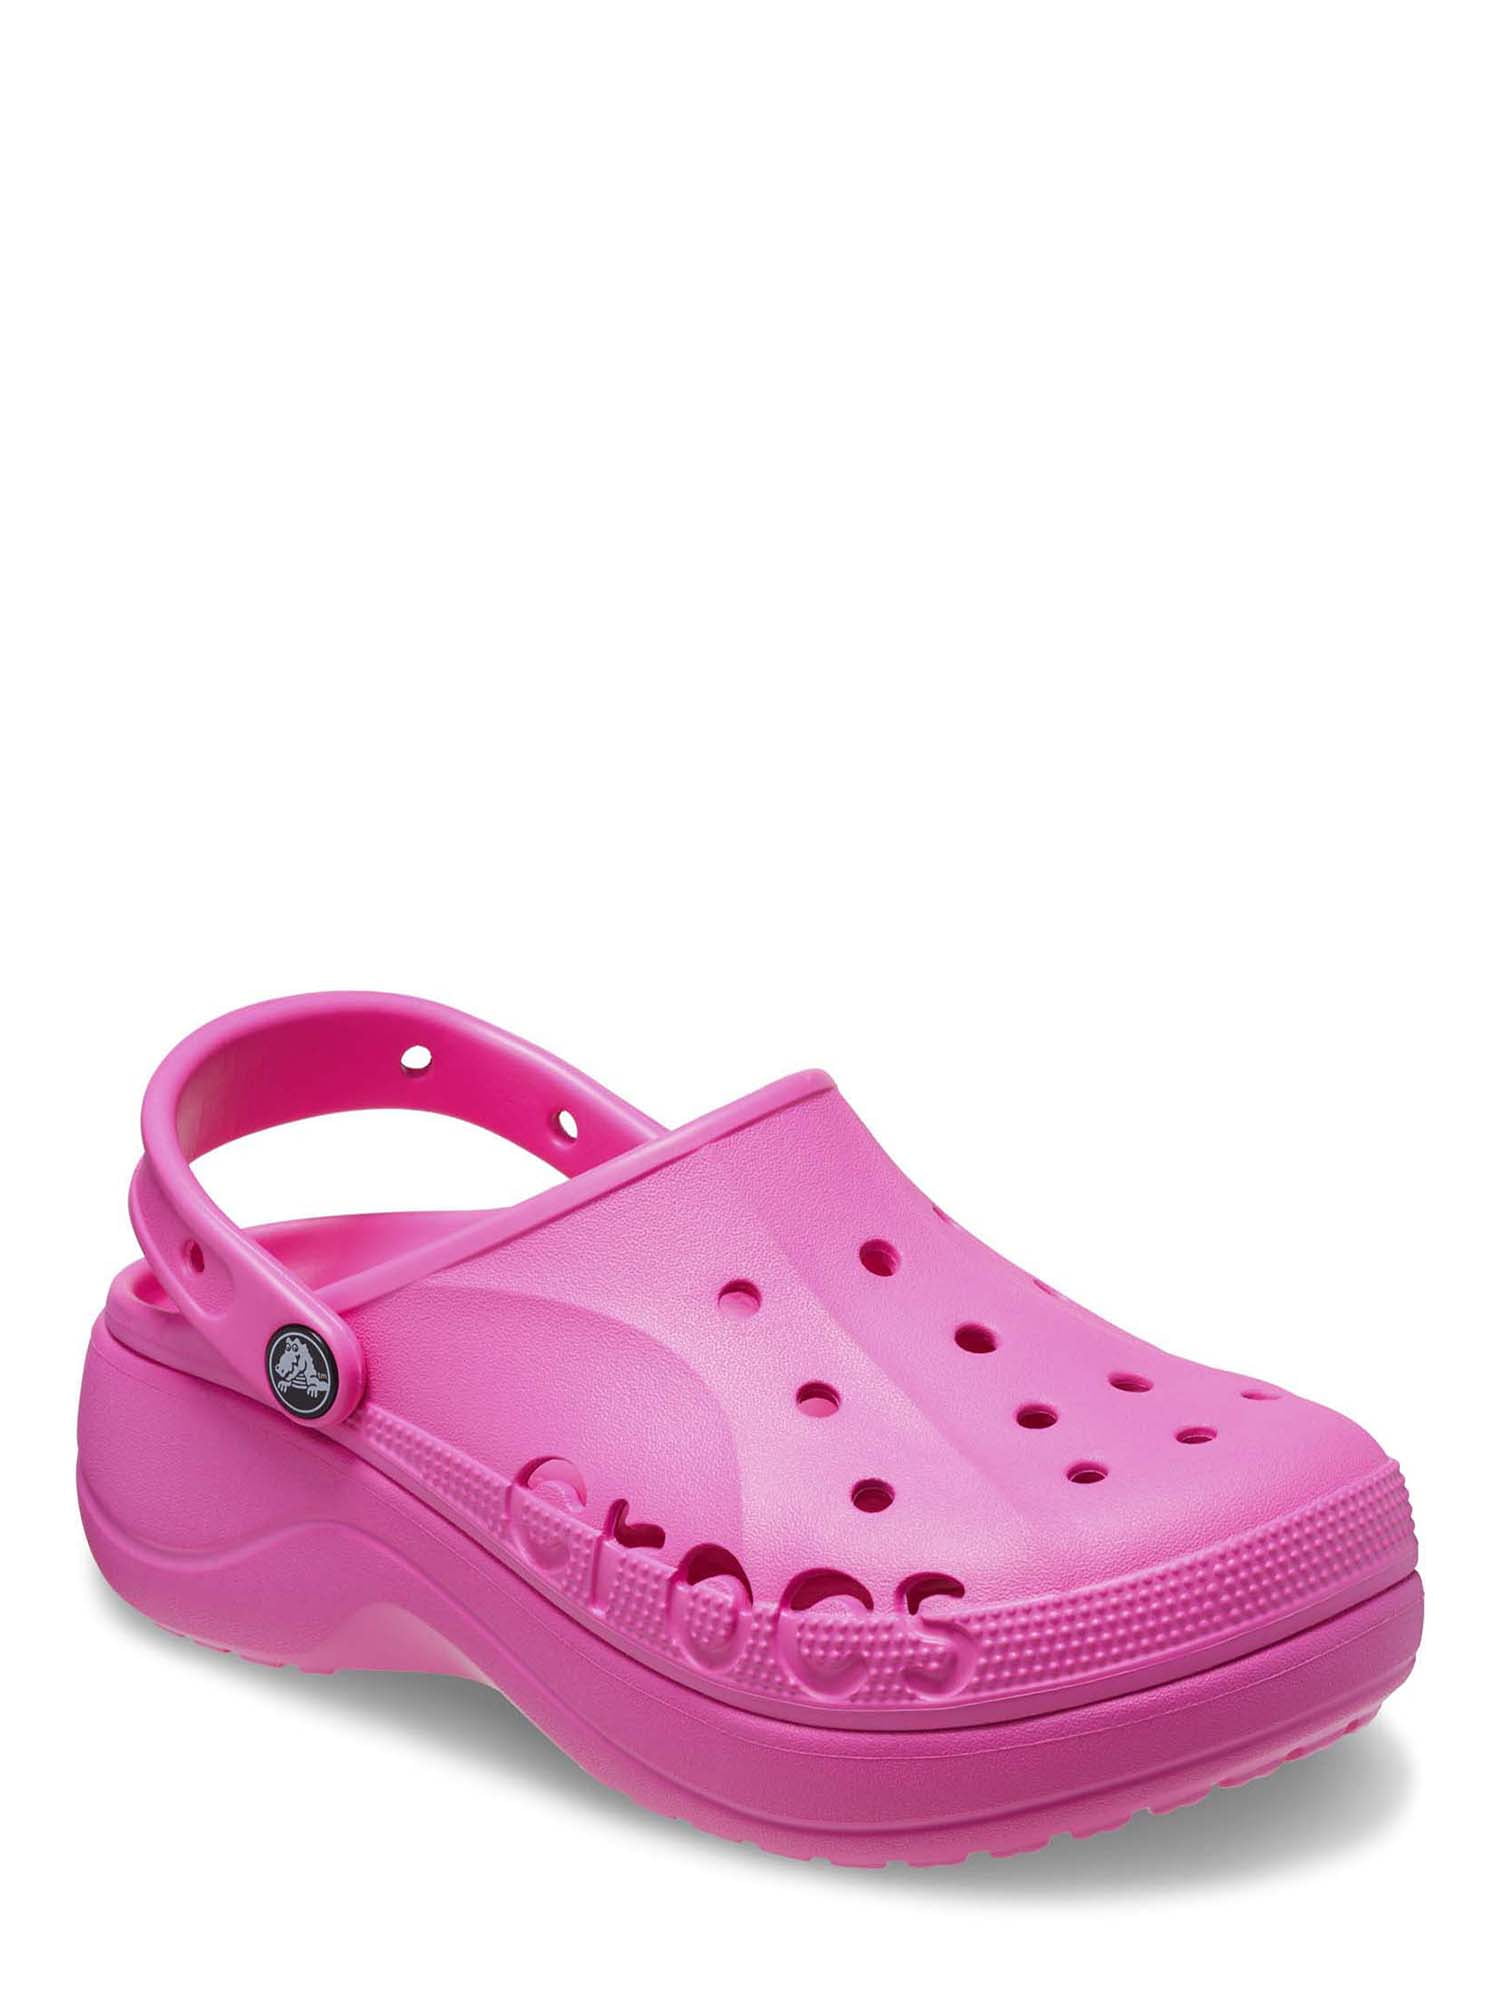 Crocs Women's Baya Platform Clog Sandal - Walmart.com